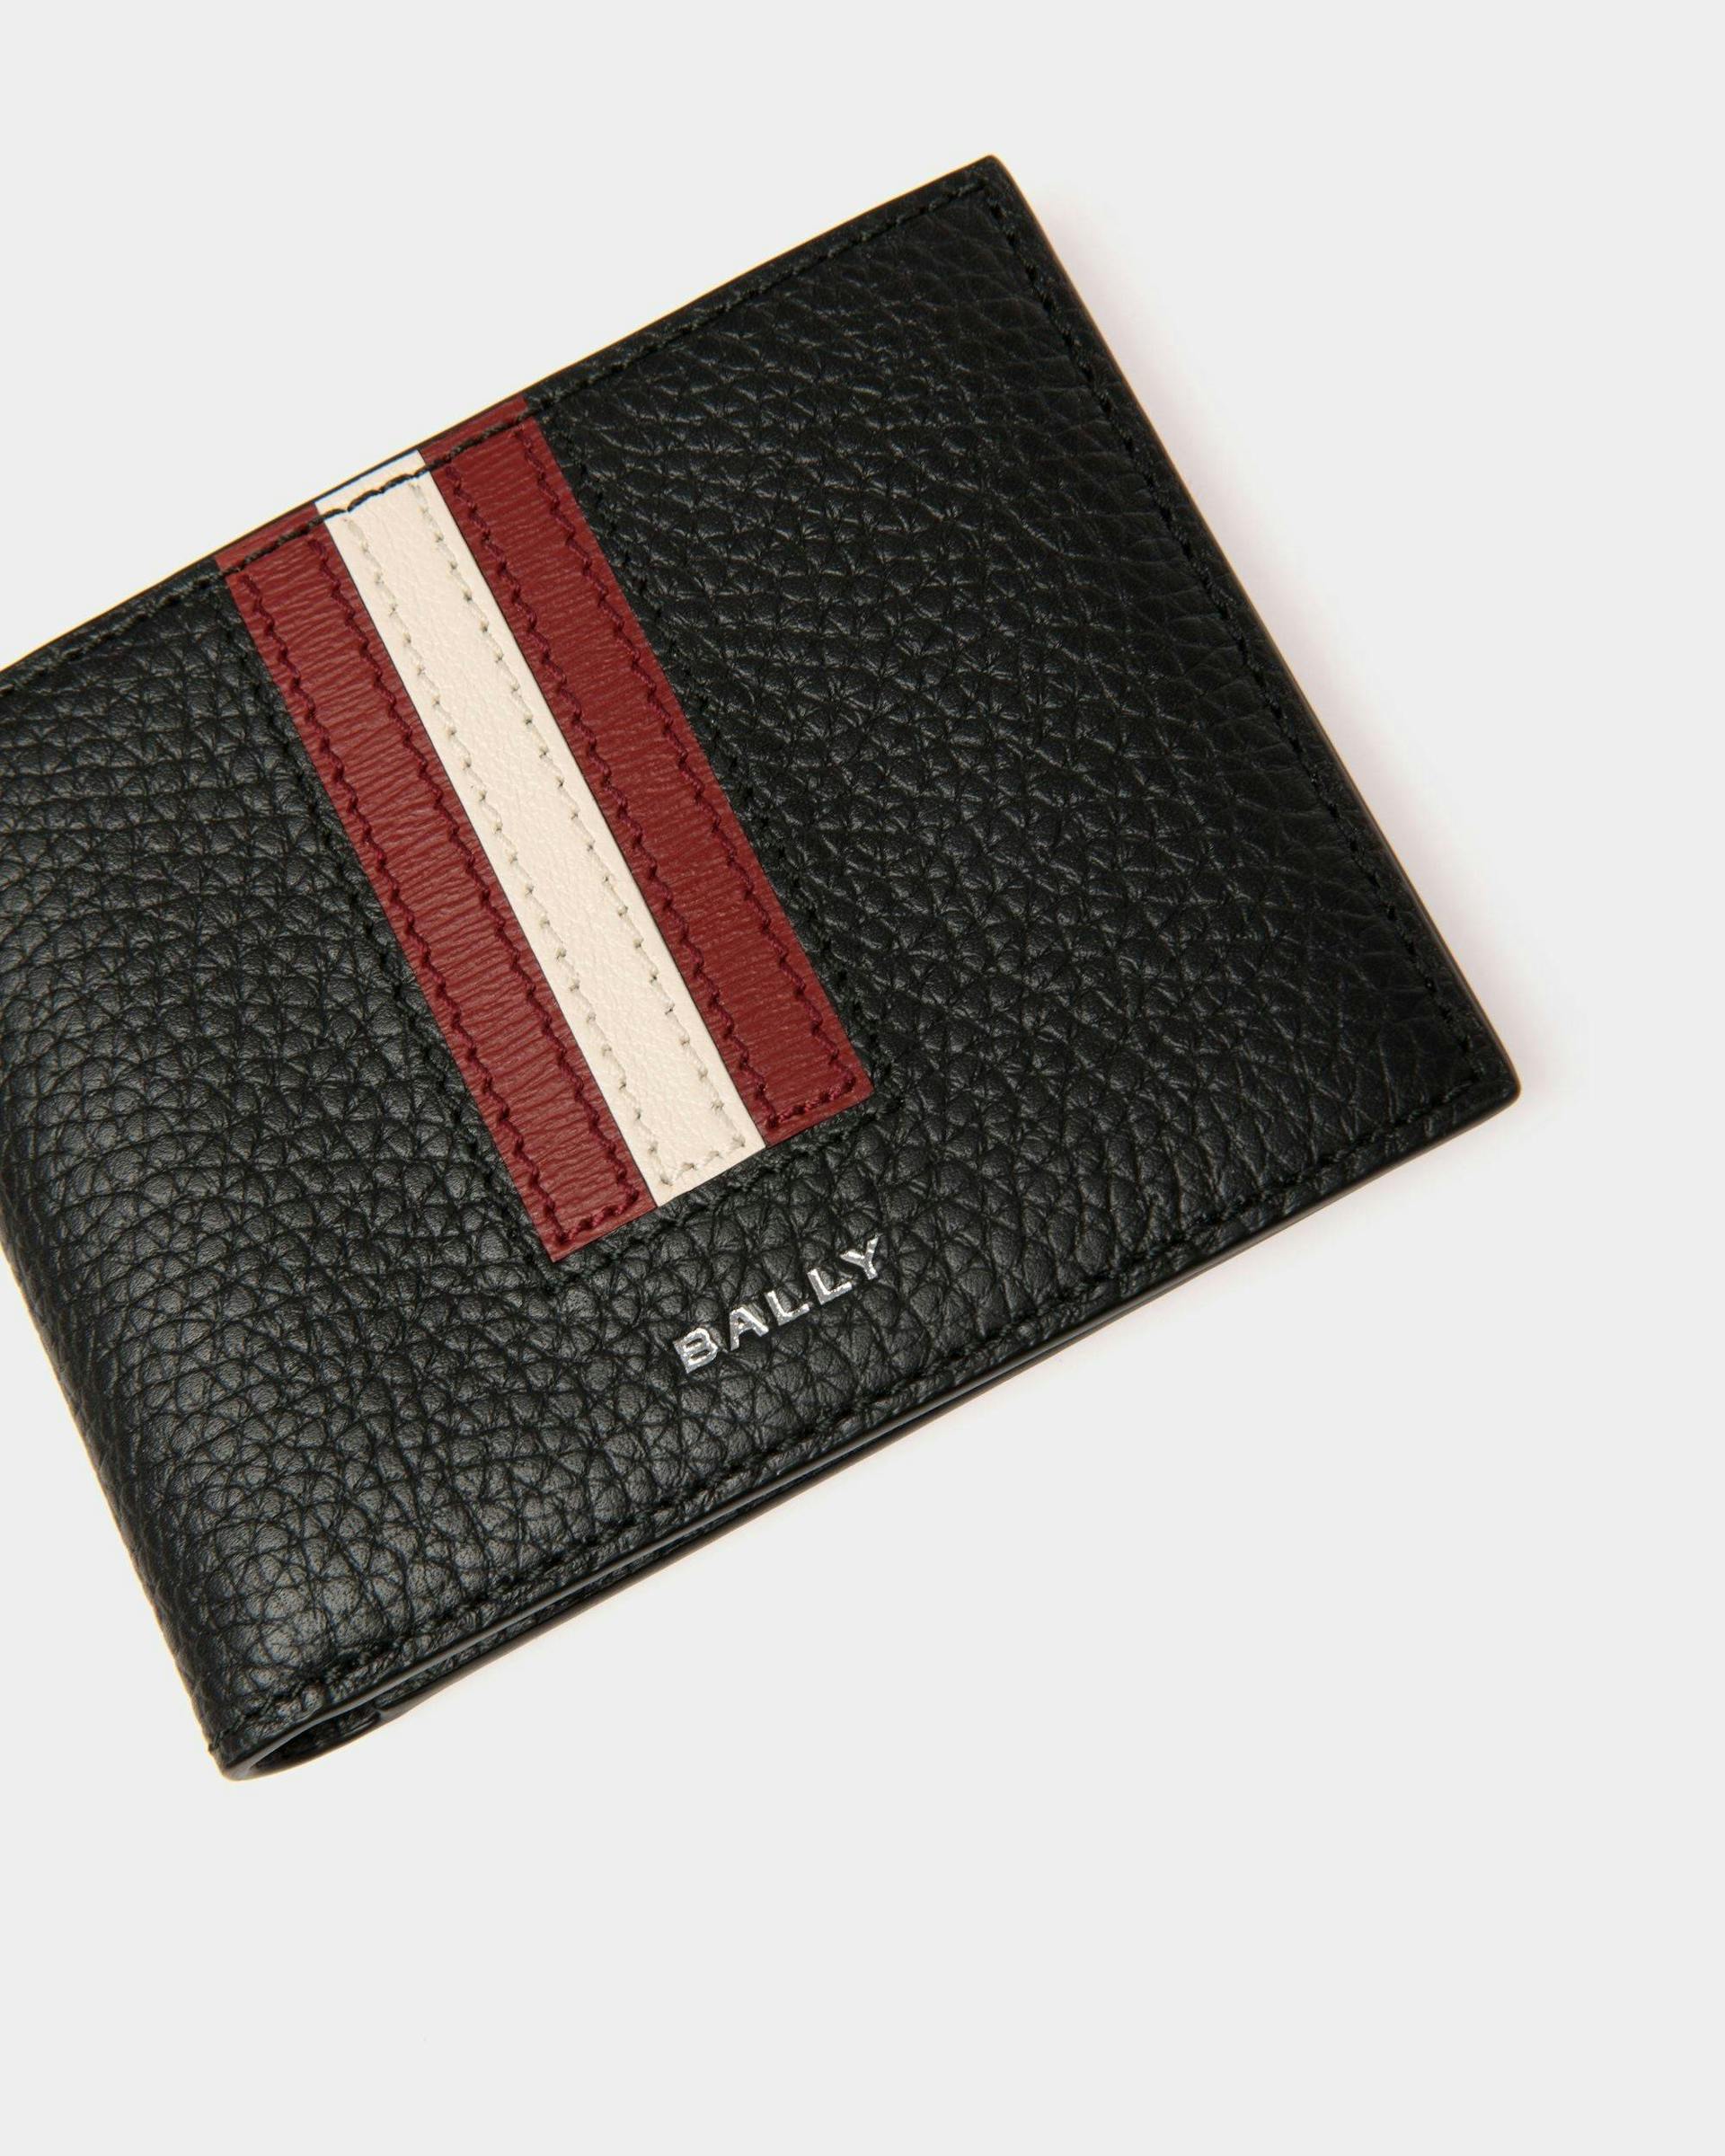 Men's Ribbon Bifold Wallet in Black Leather | Bally | Still Life Detail